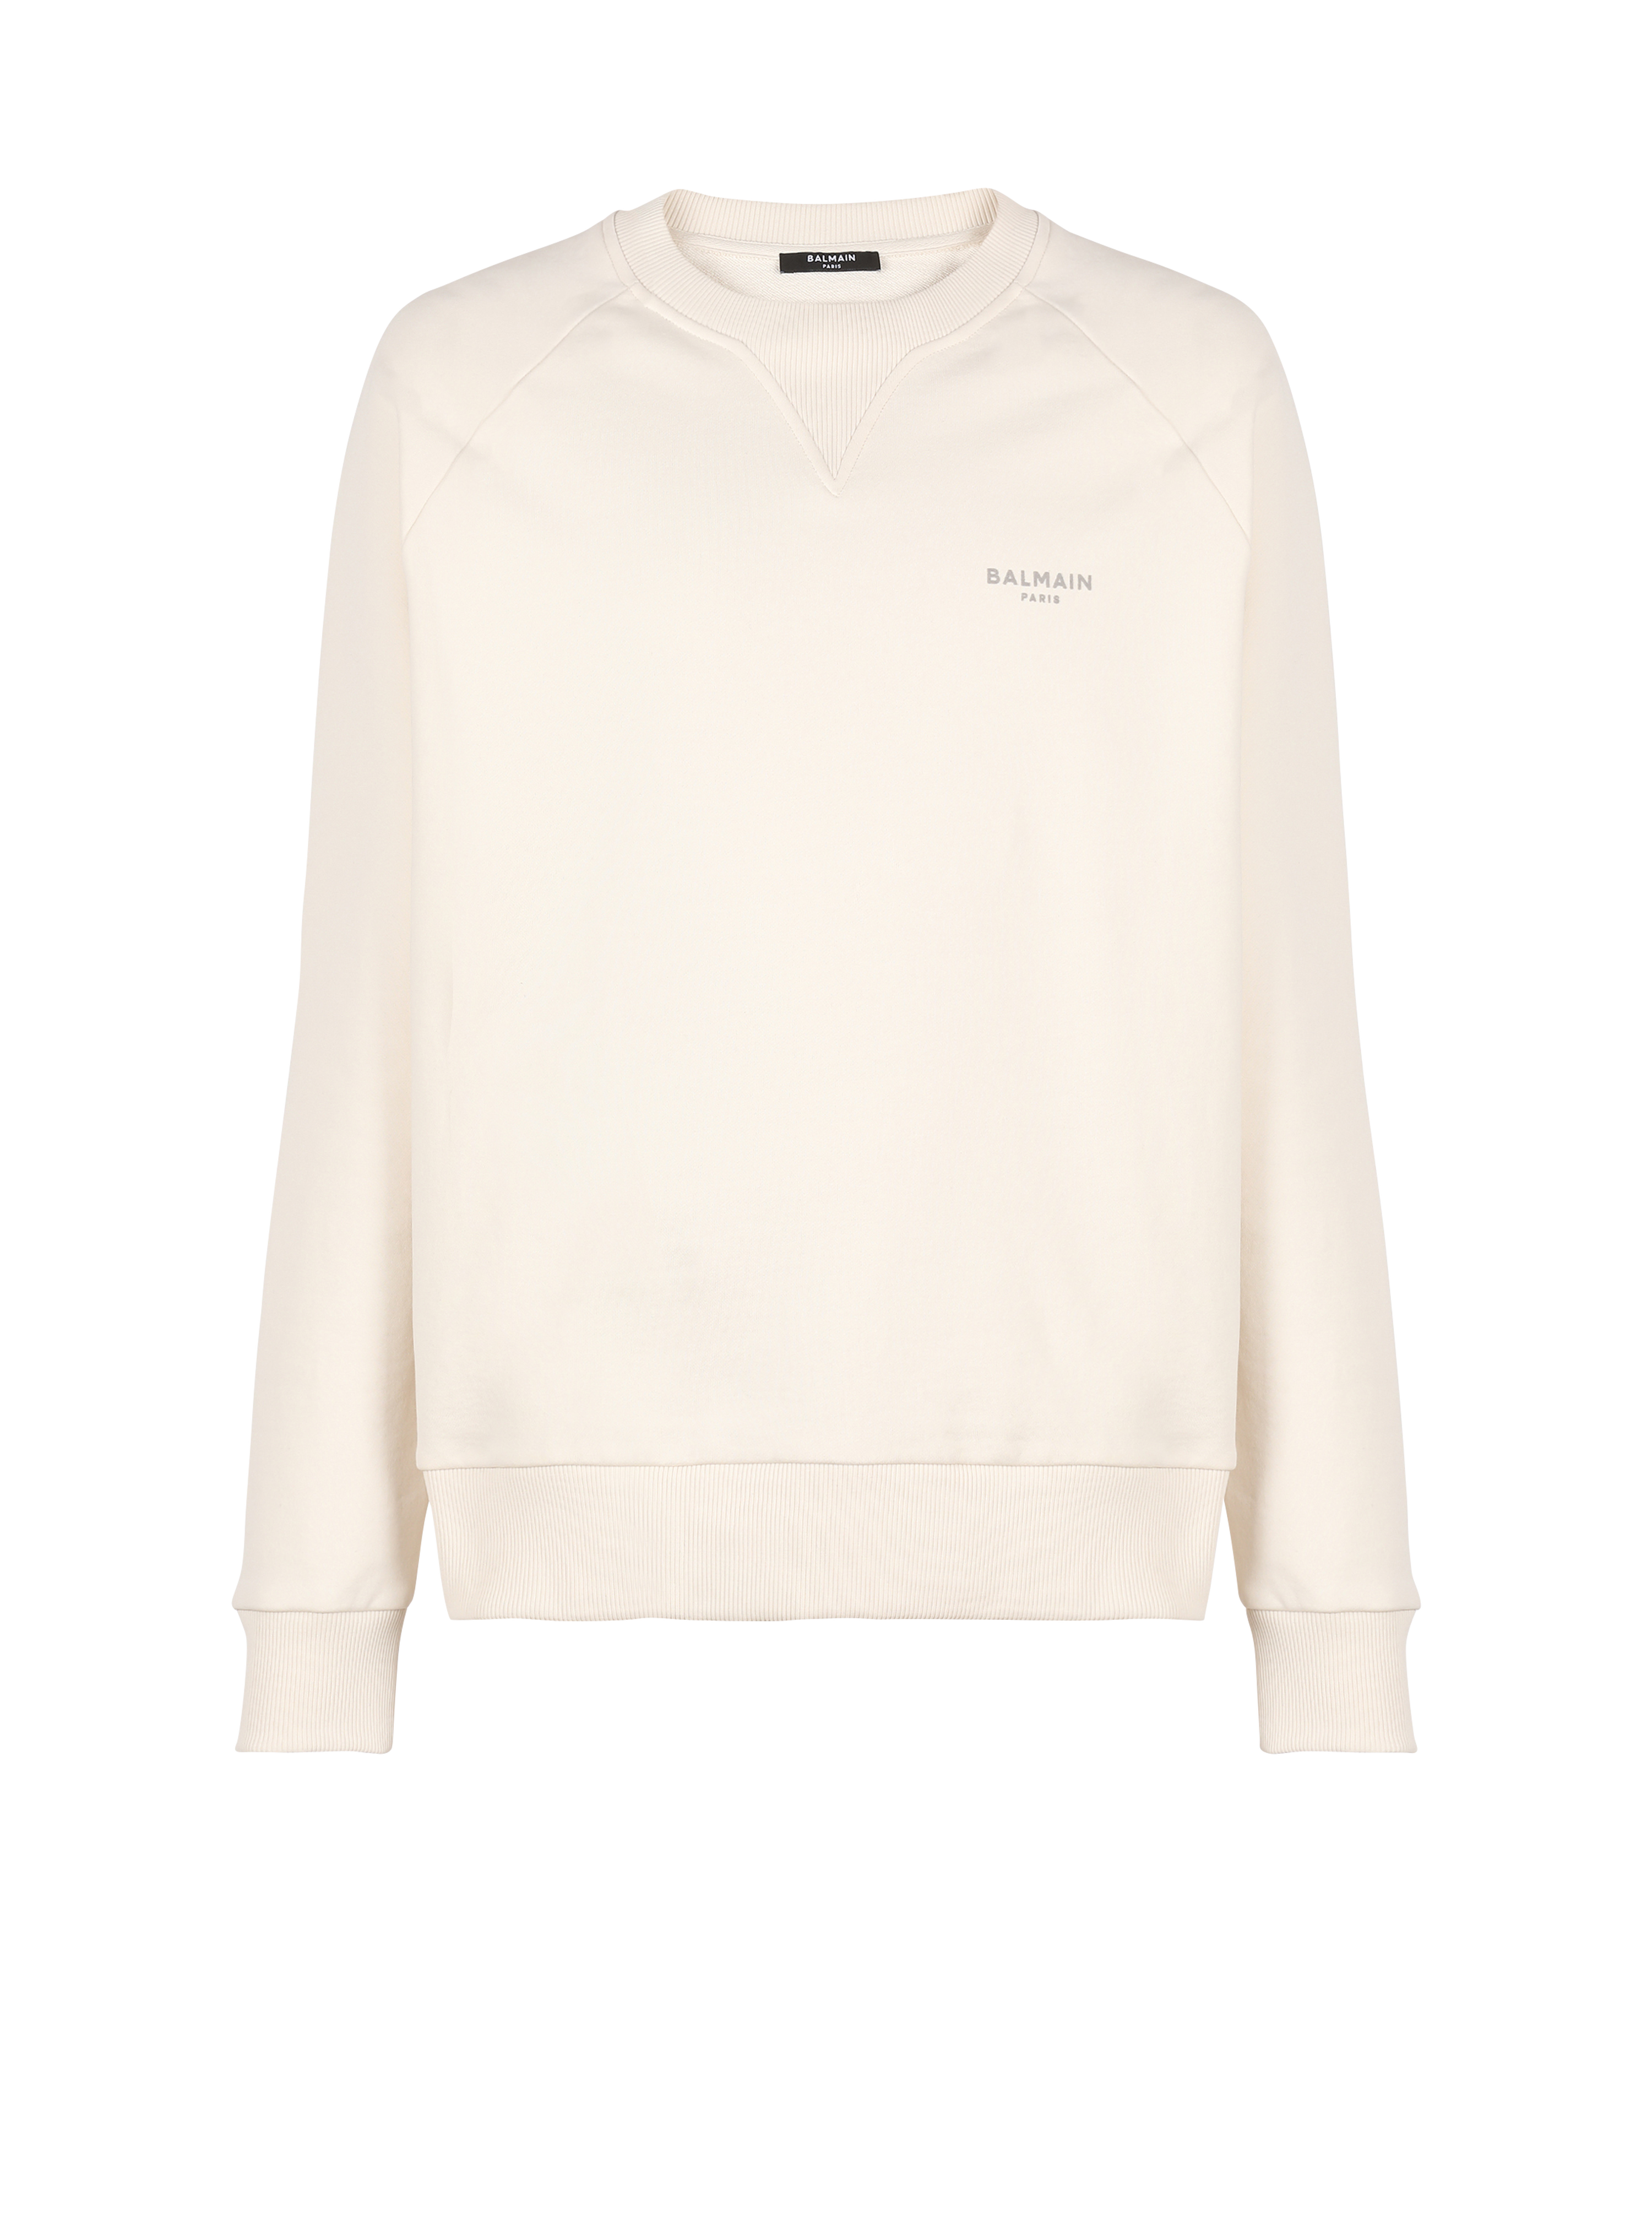 Cotton printed Balmain logo sweatshirt, beige